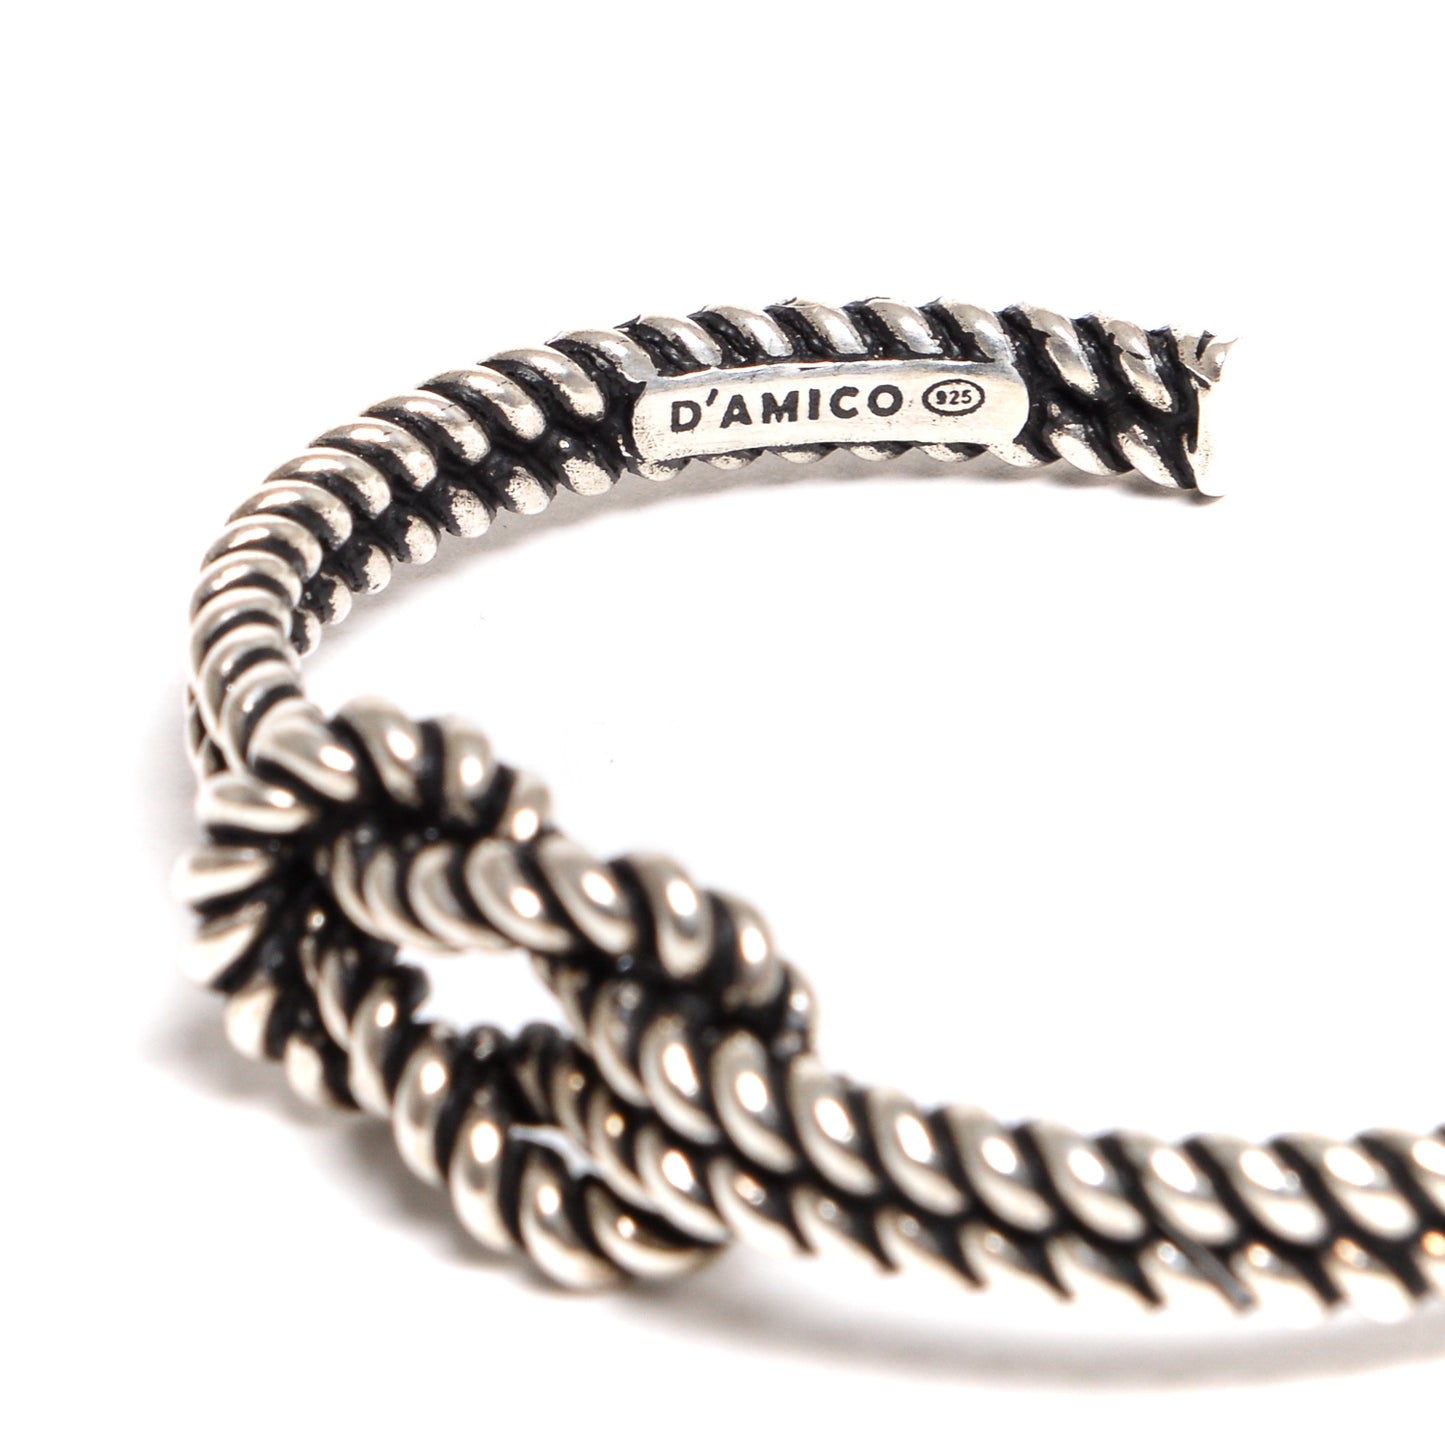 Torchon Slave Bracelet Flat Knot